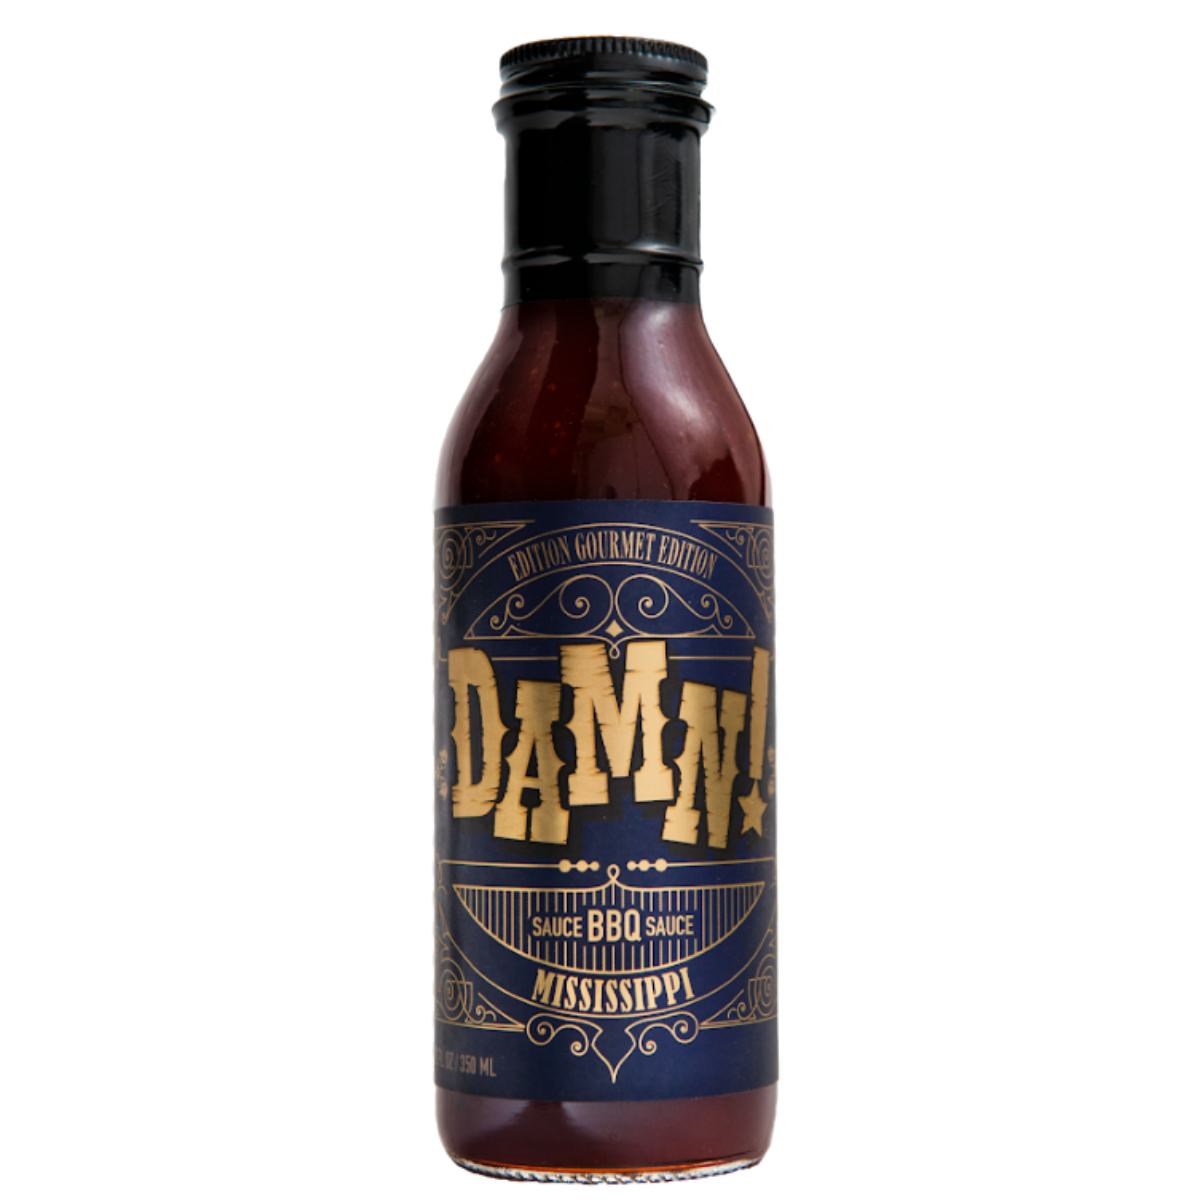 La sauce Gourmet Mississippi de Damn! (350ml) par Damn! vendu par BBQQUEBEC.com